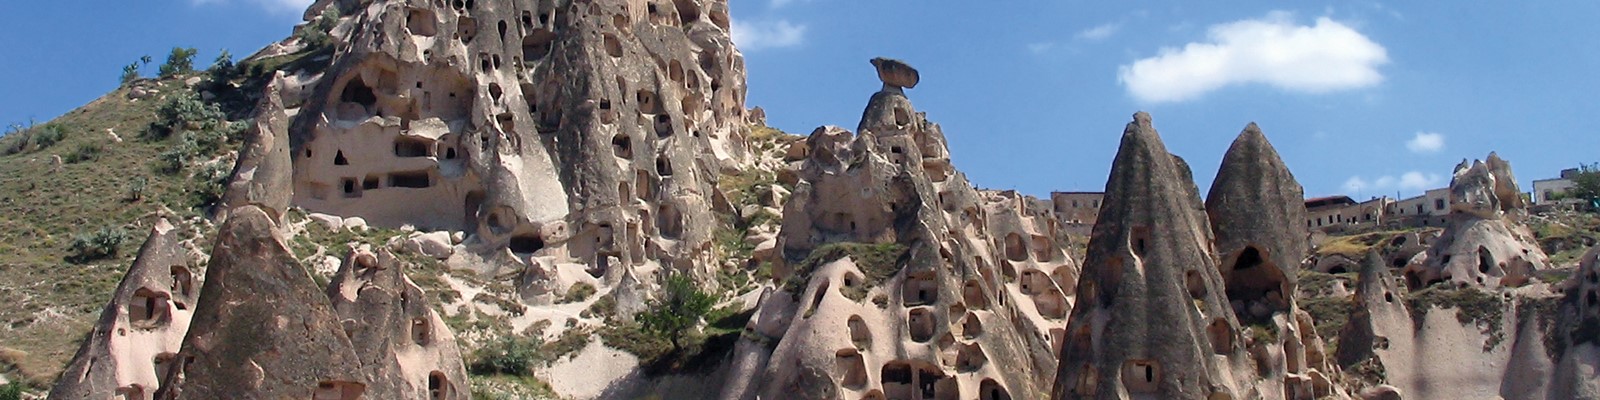 Cave Dwellings in Cappadocia National Park